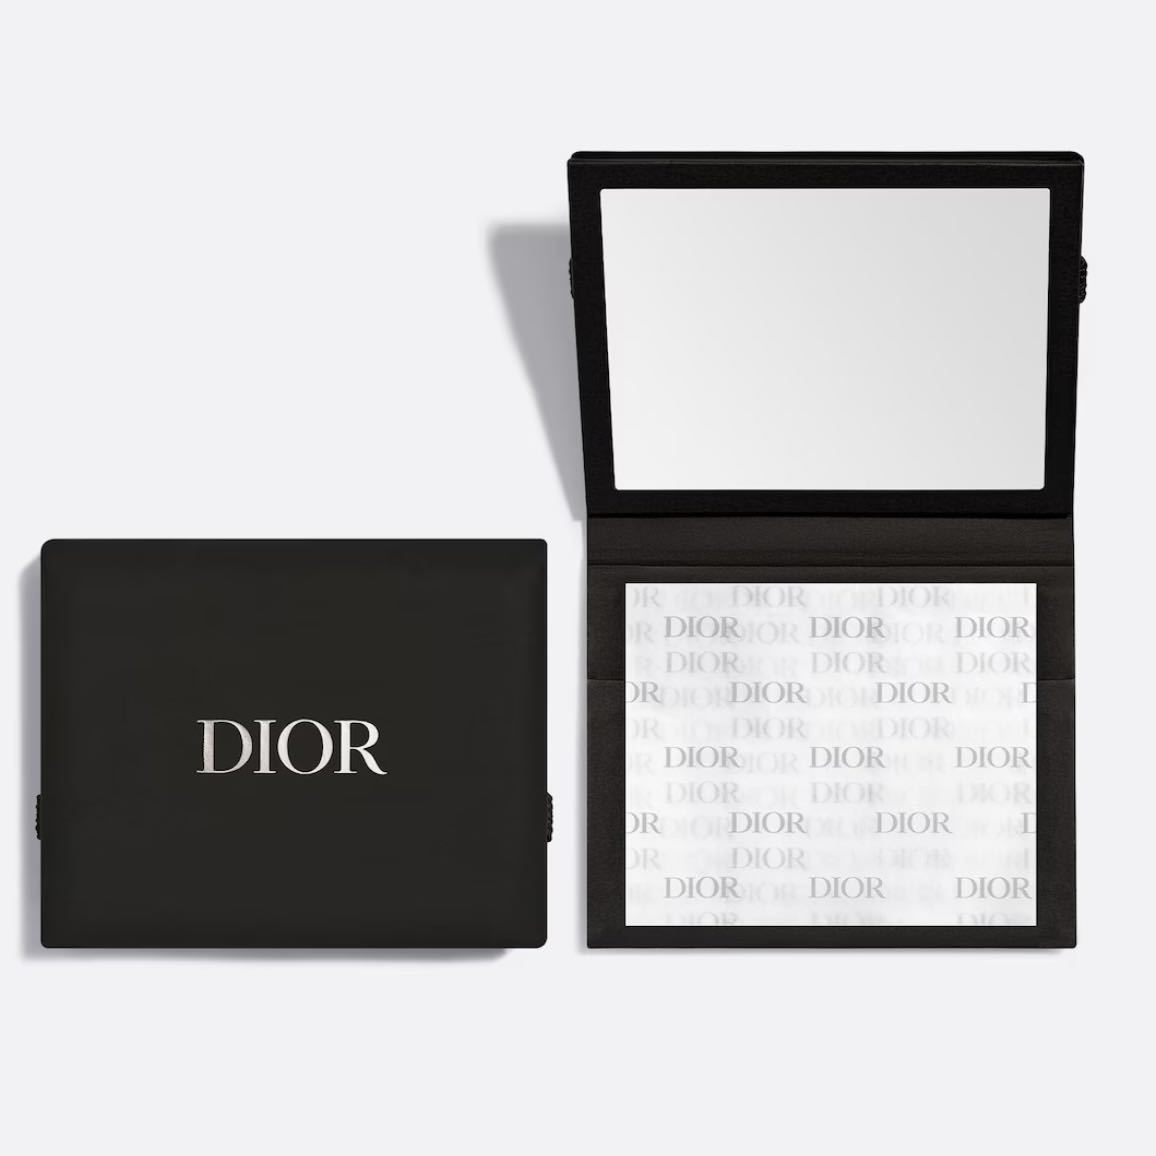  new goods unused *DIOR Dior s gold mati fine g paper facial oil blotting paper mirror attaching mirror 